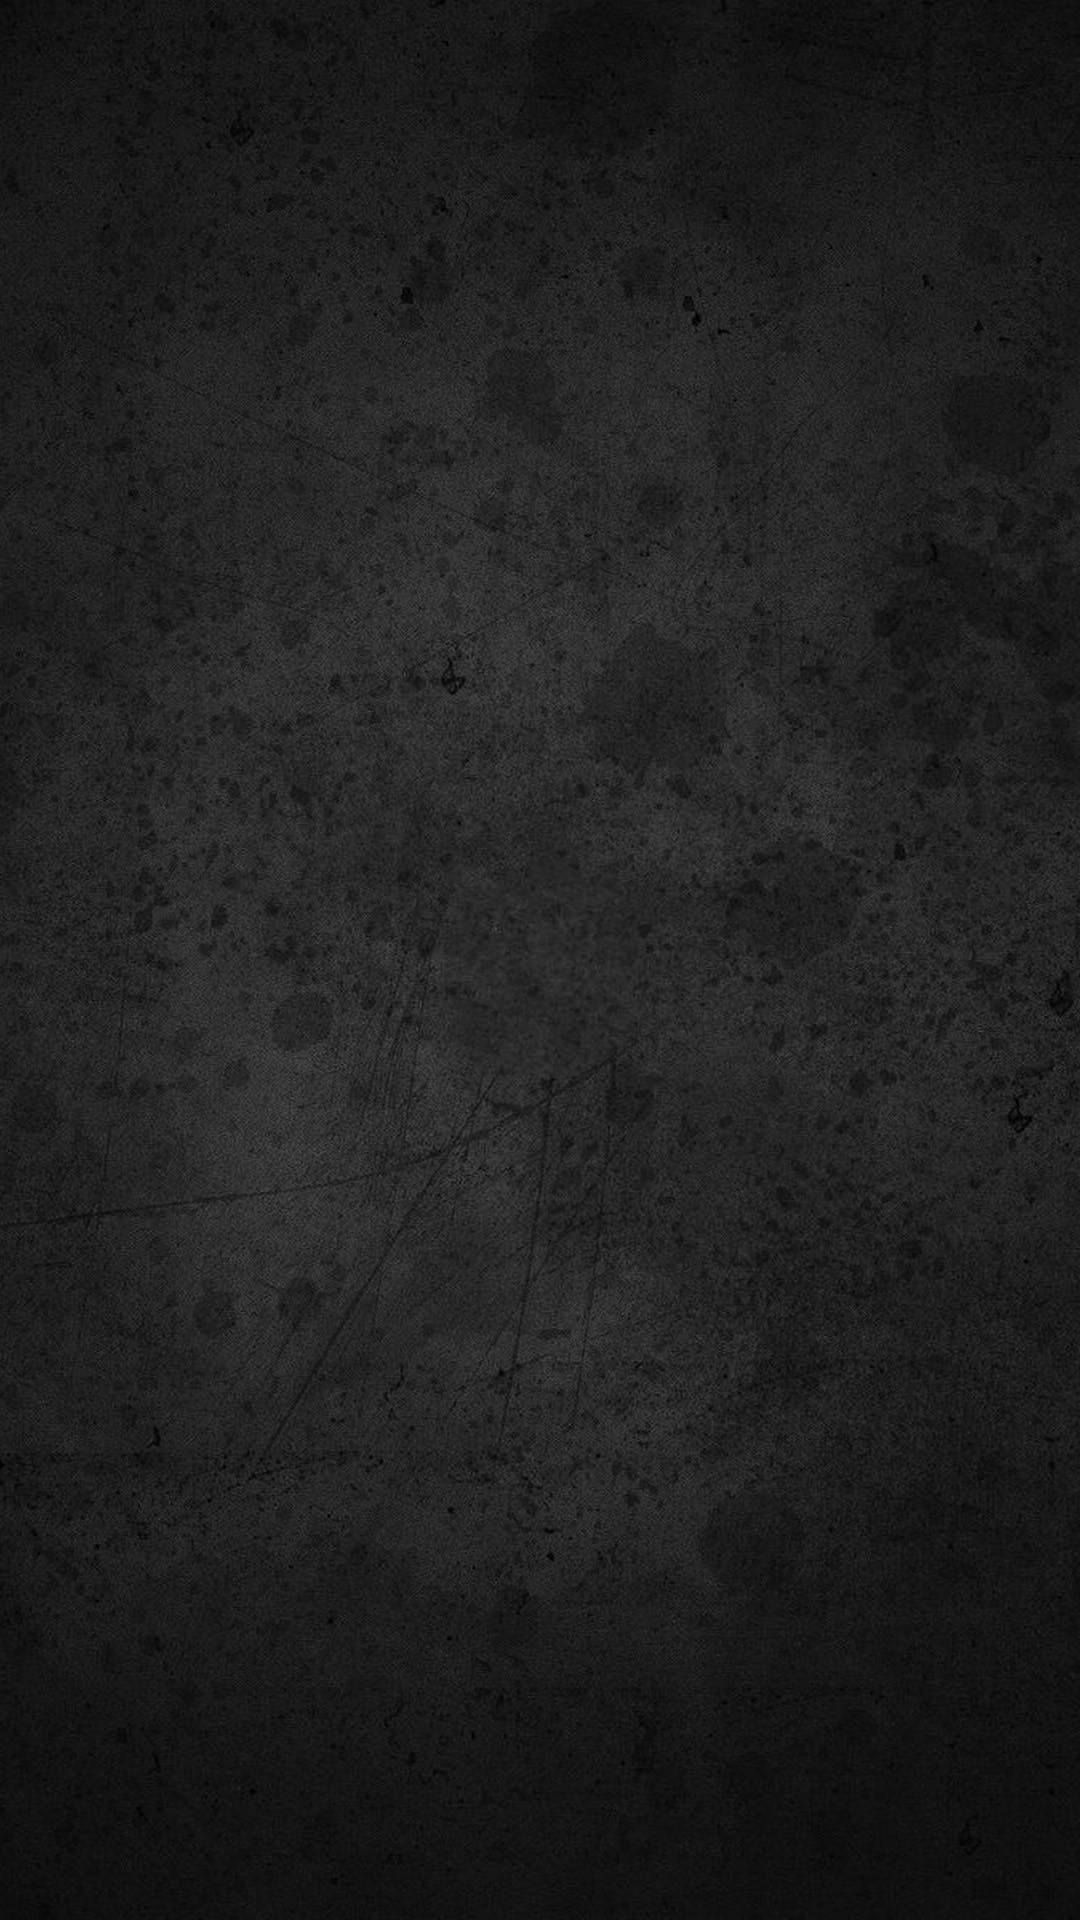 1080x1920  Batman black and white black iphone wallpaper.